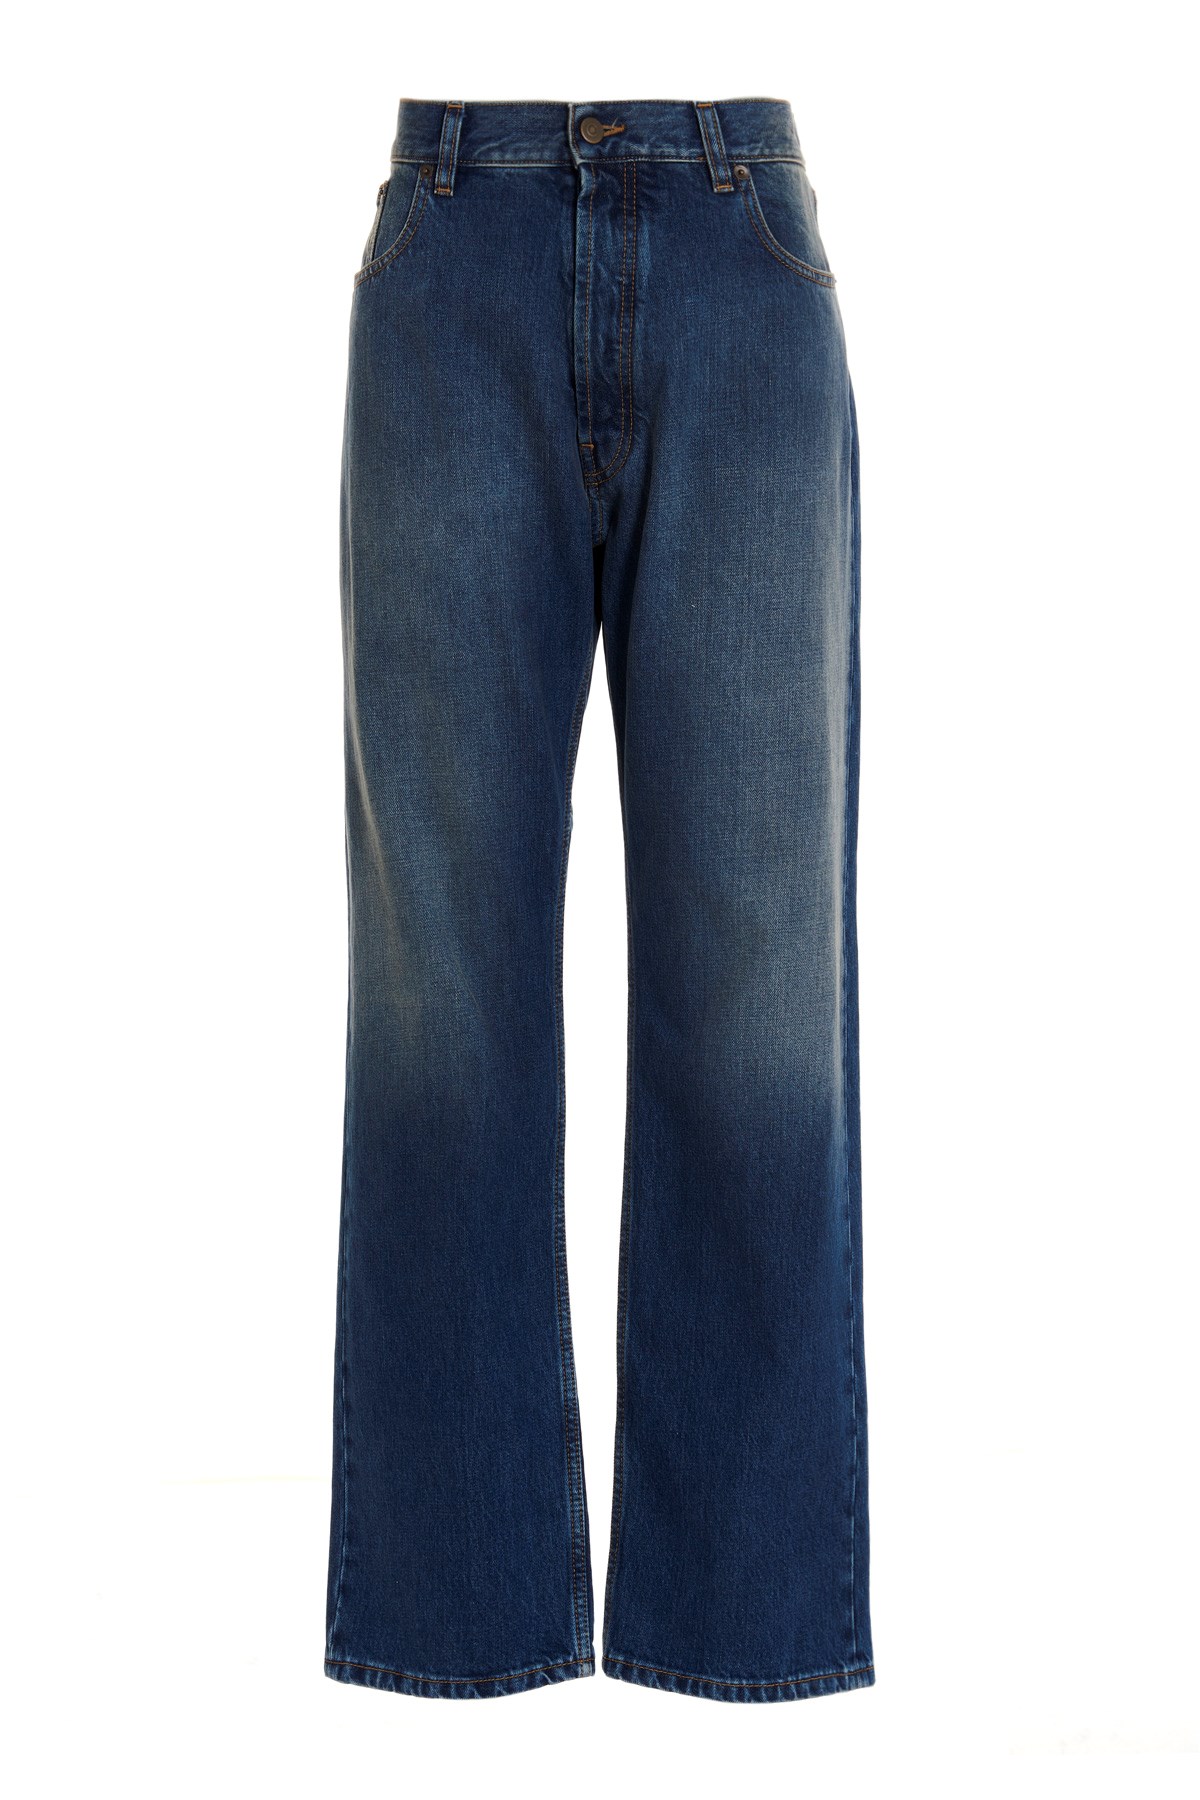 MAISON MARGIELA Jeans With Stitching Details